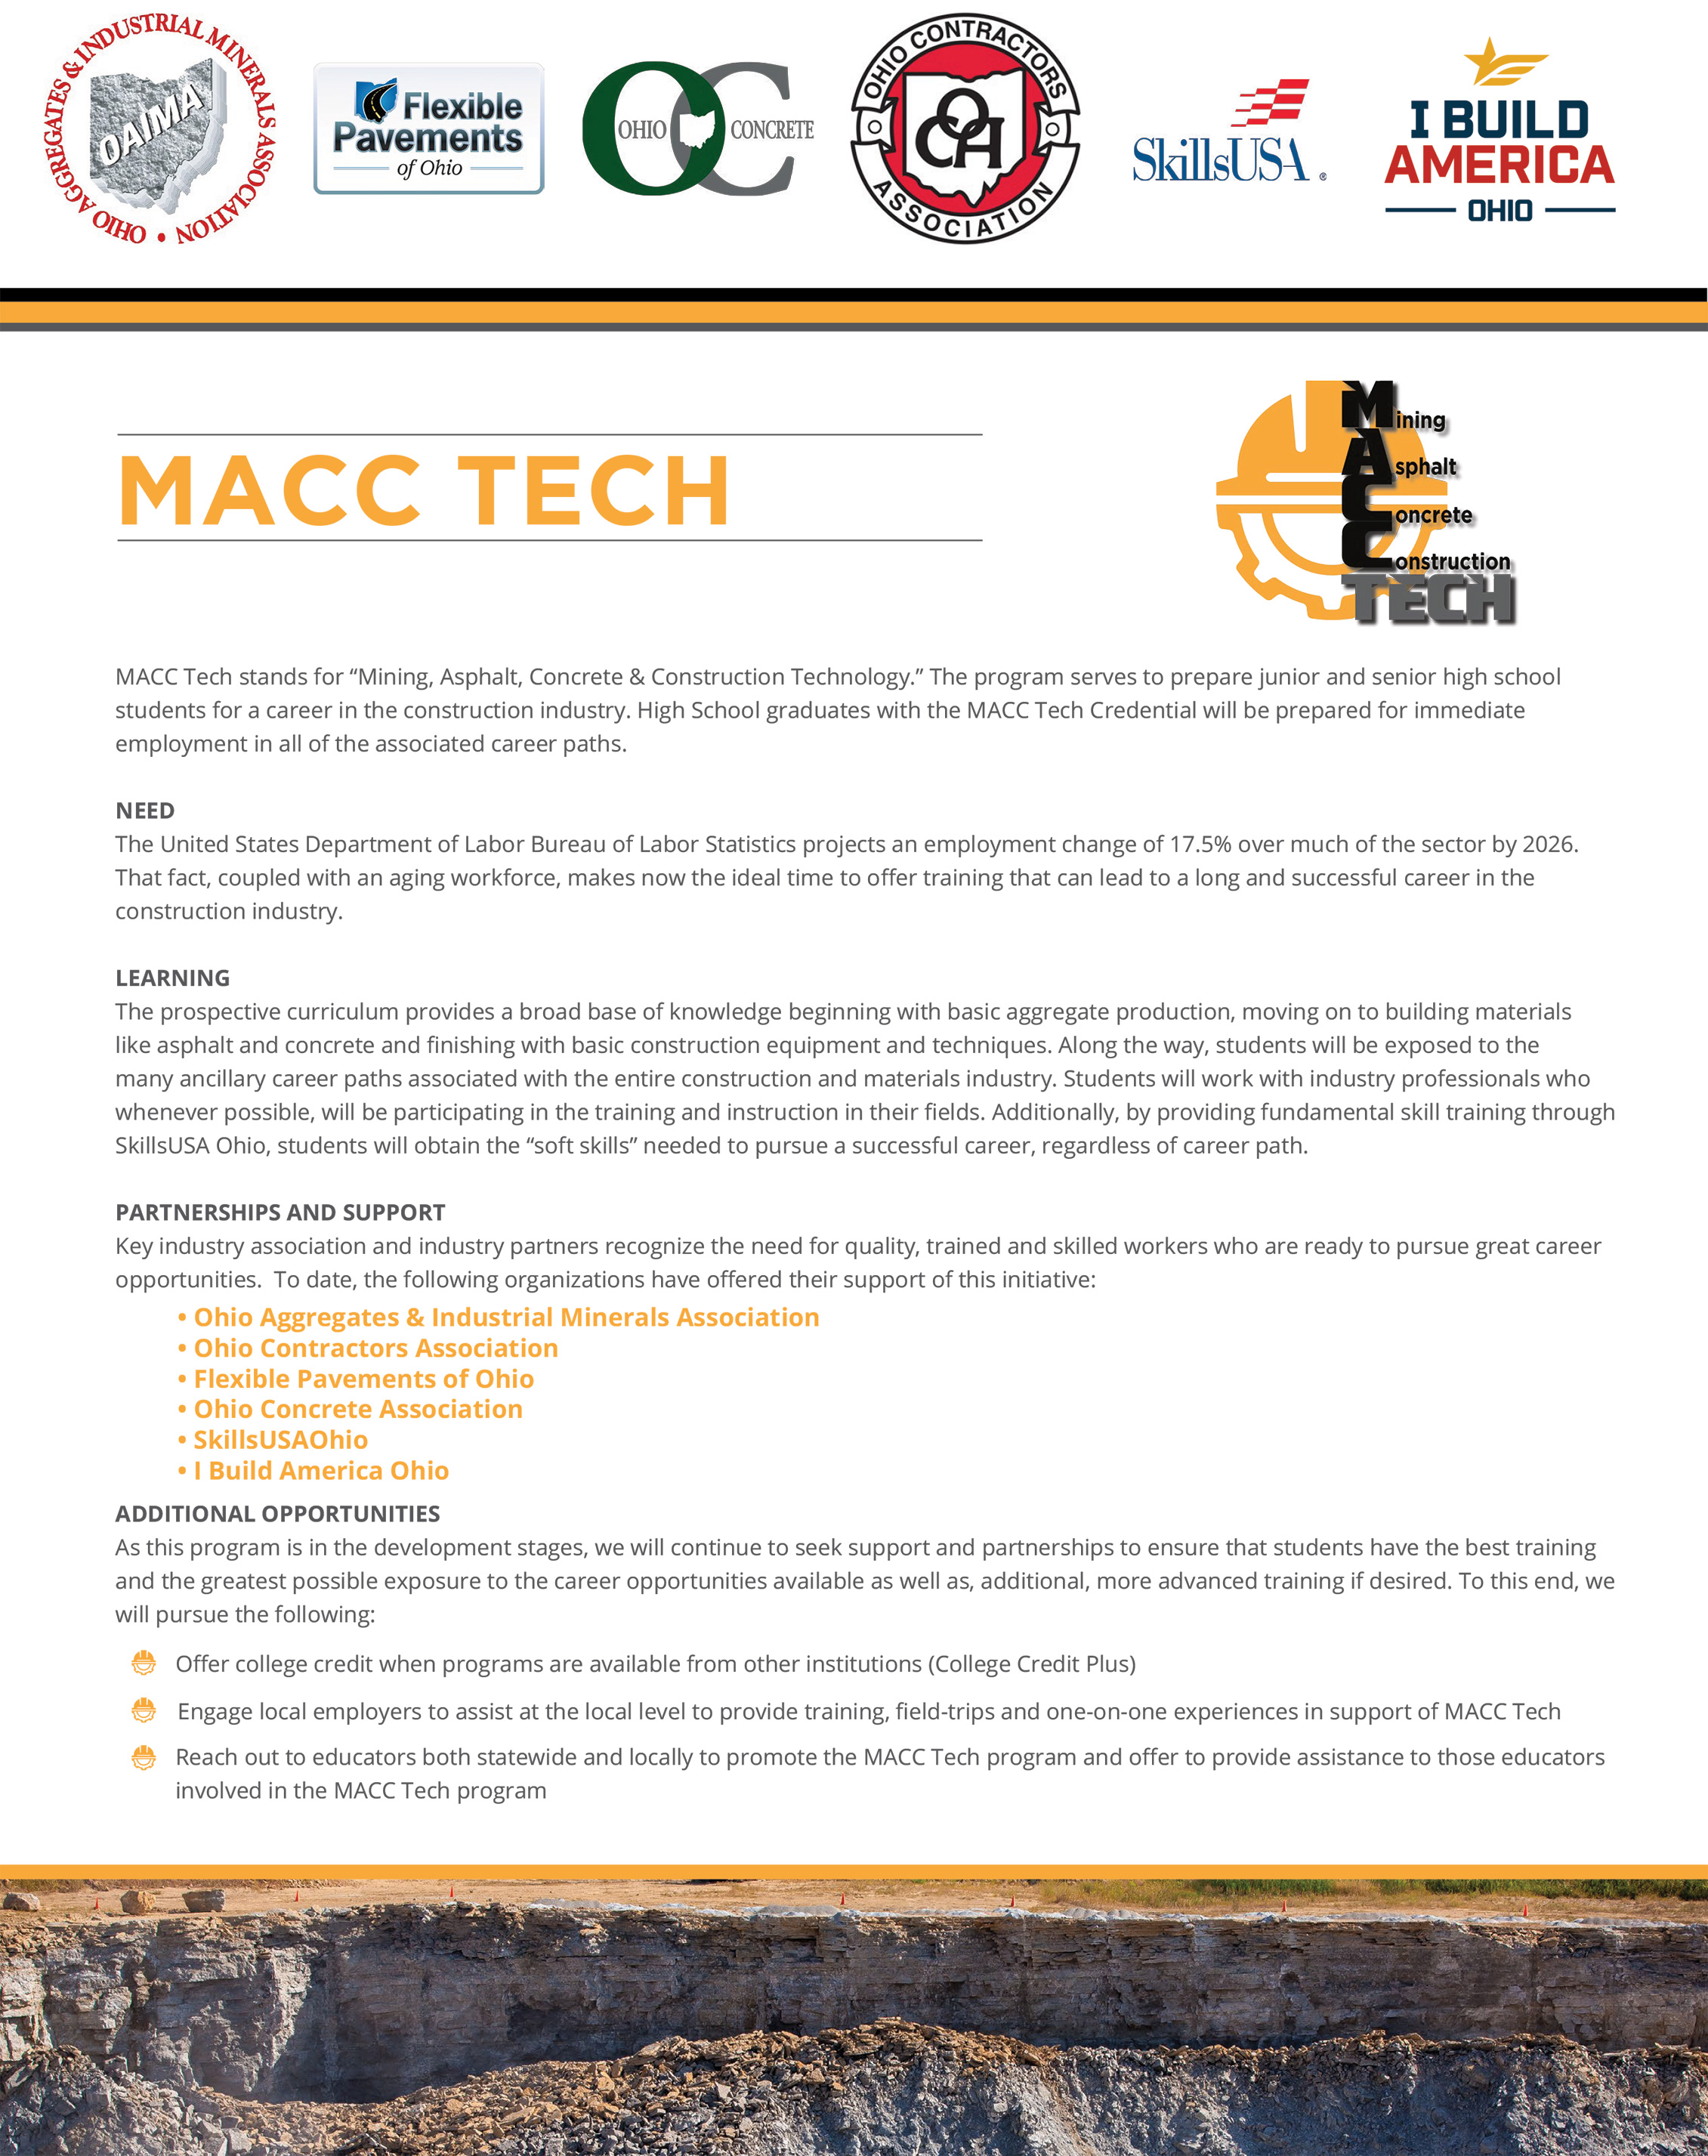 MACC Tech